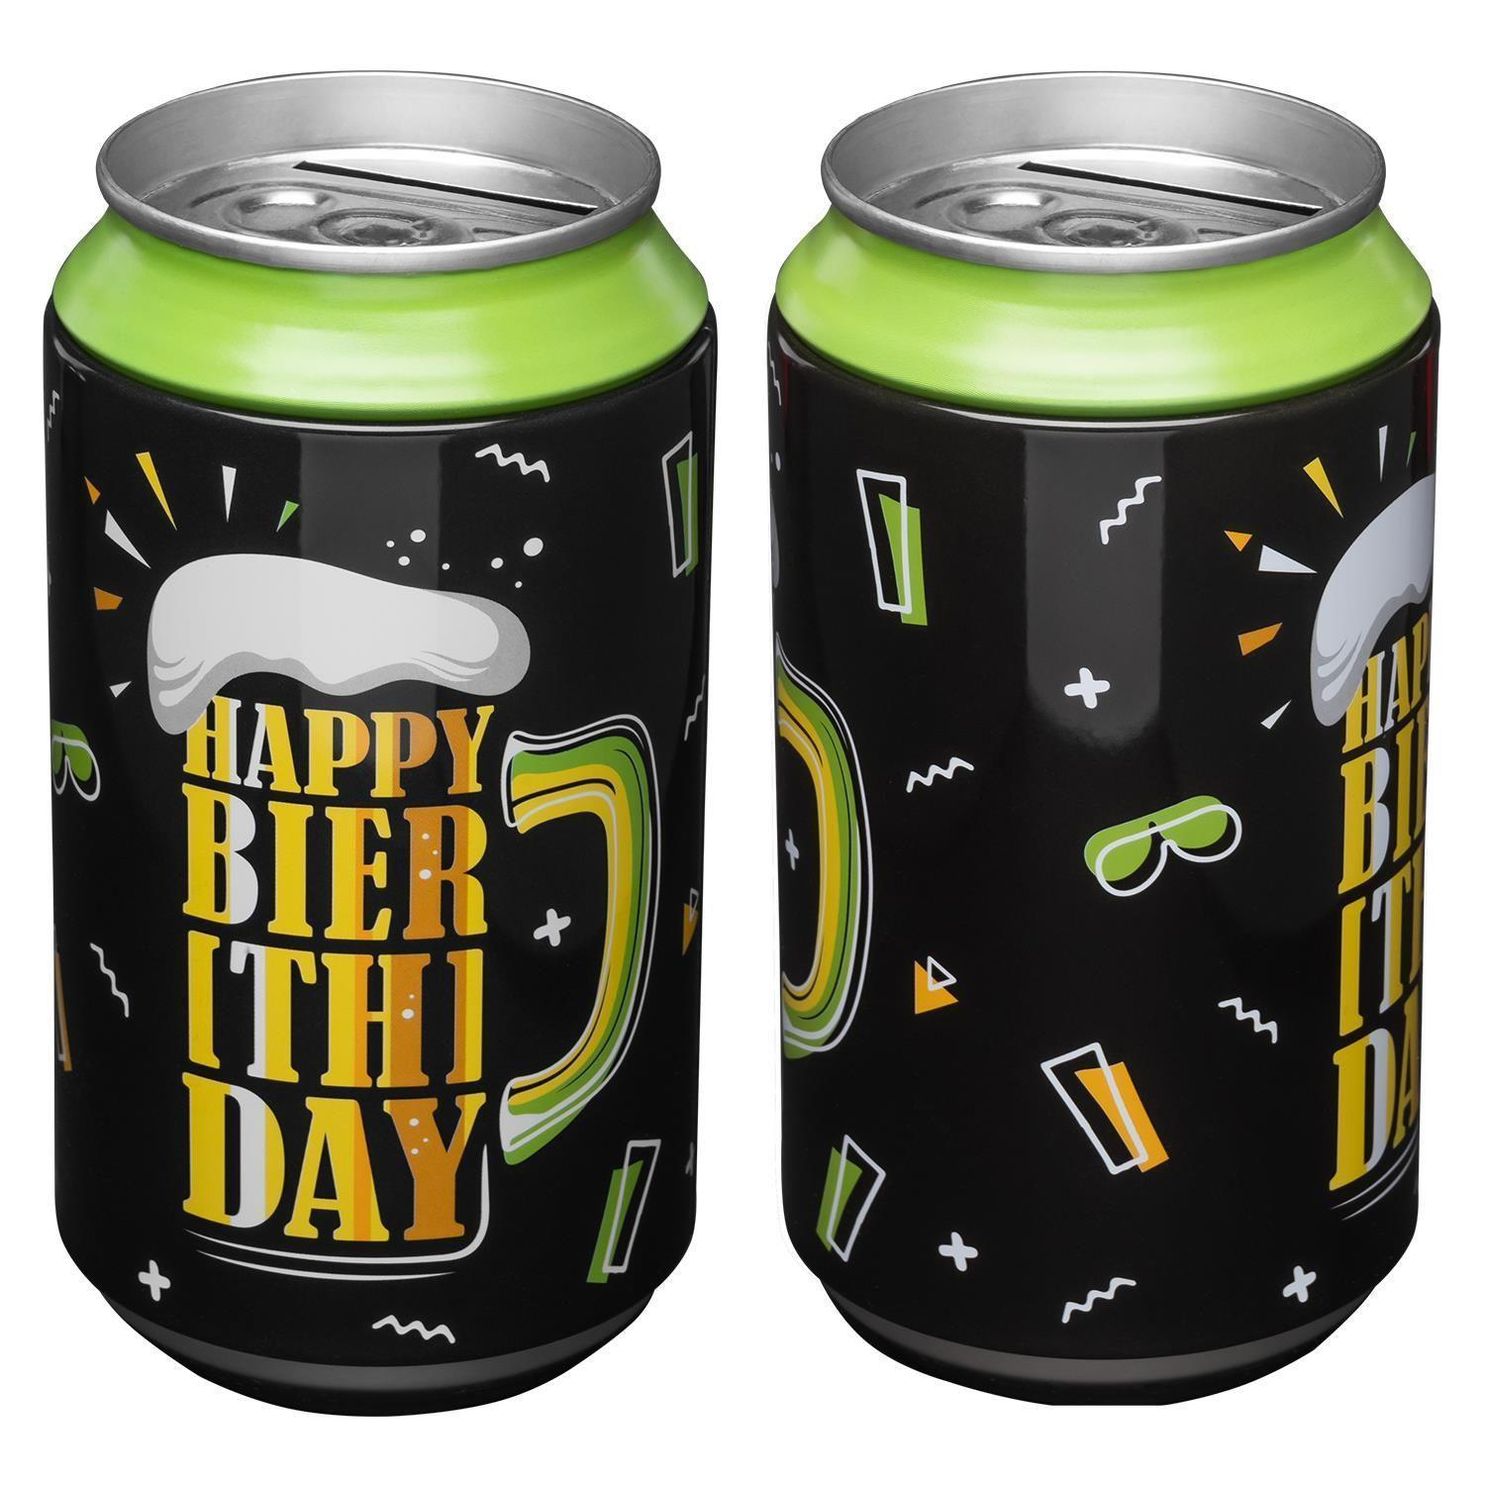 Blech-Spardose Männer Happy Beer th day bestellen | Weltbild.ch